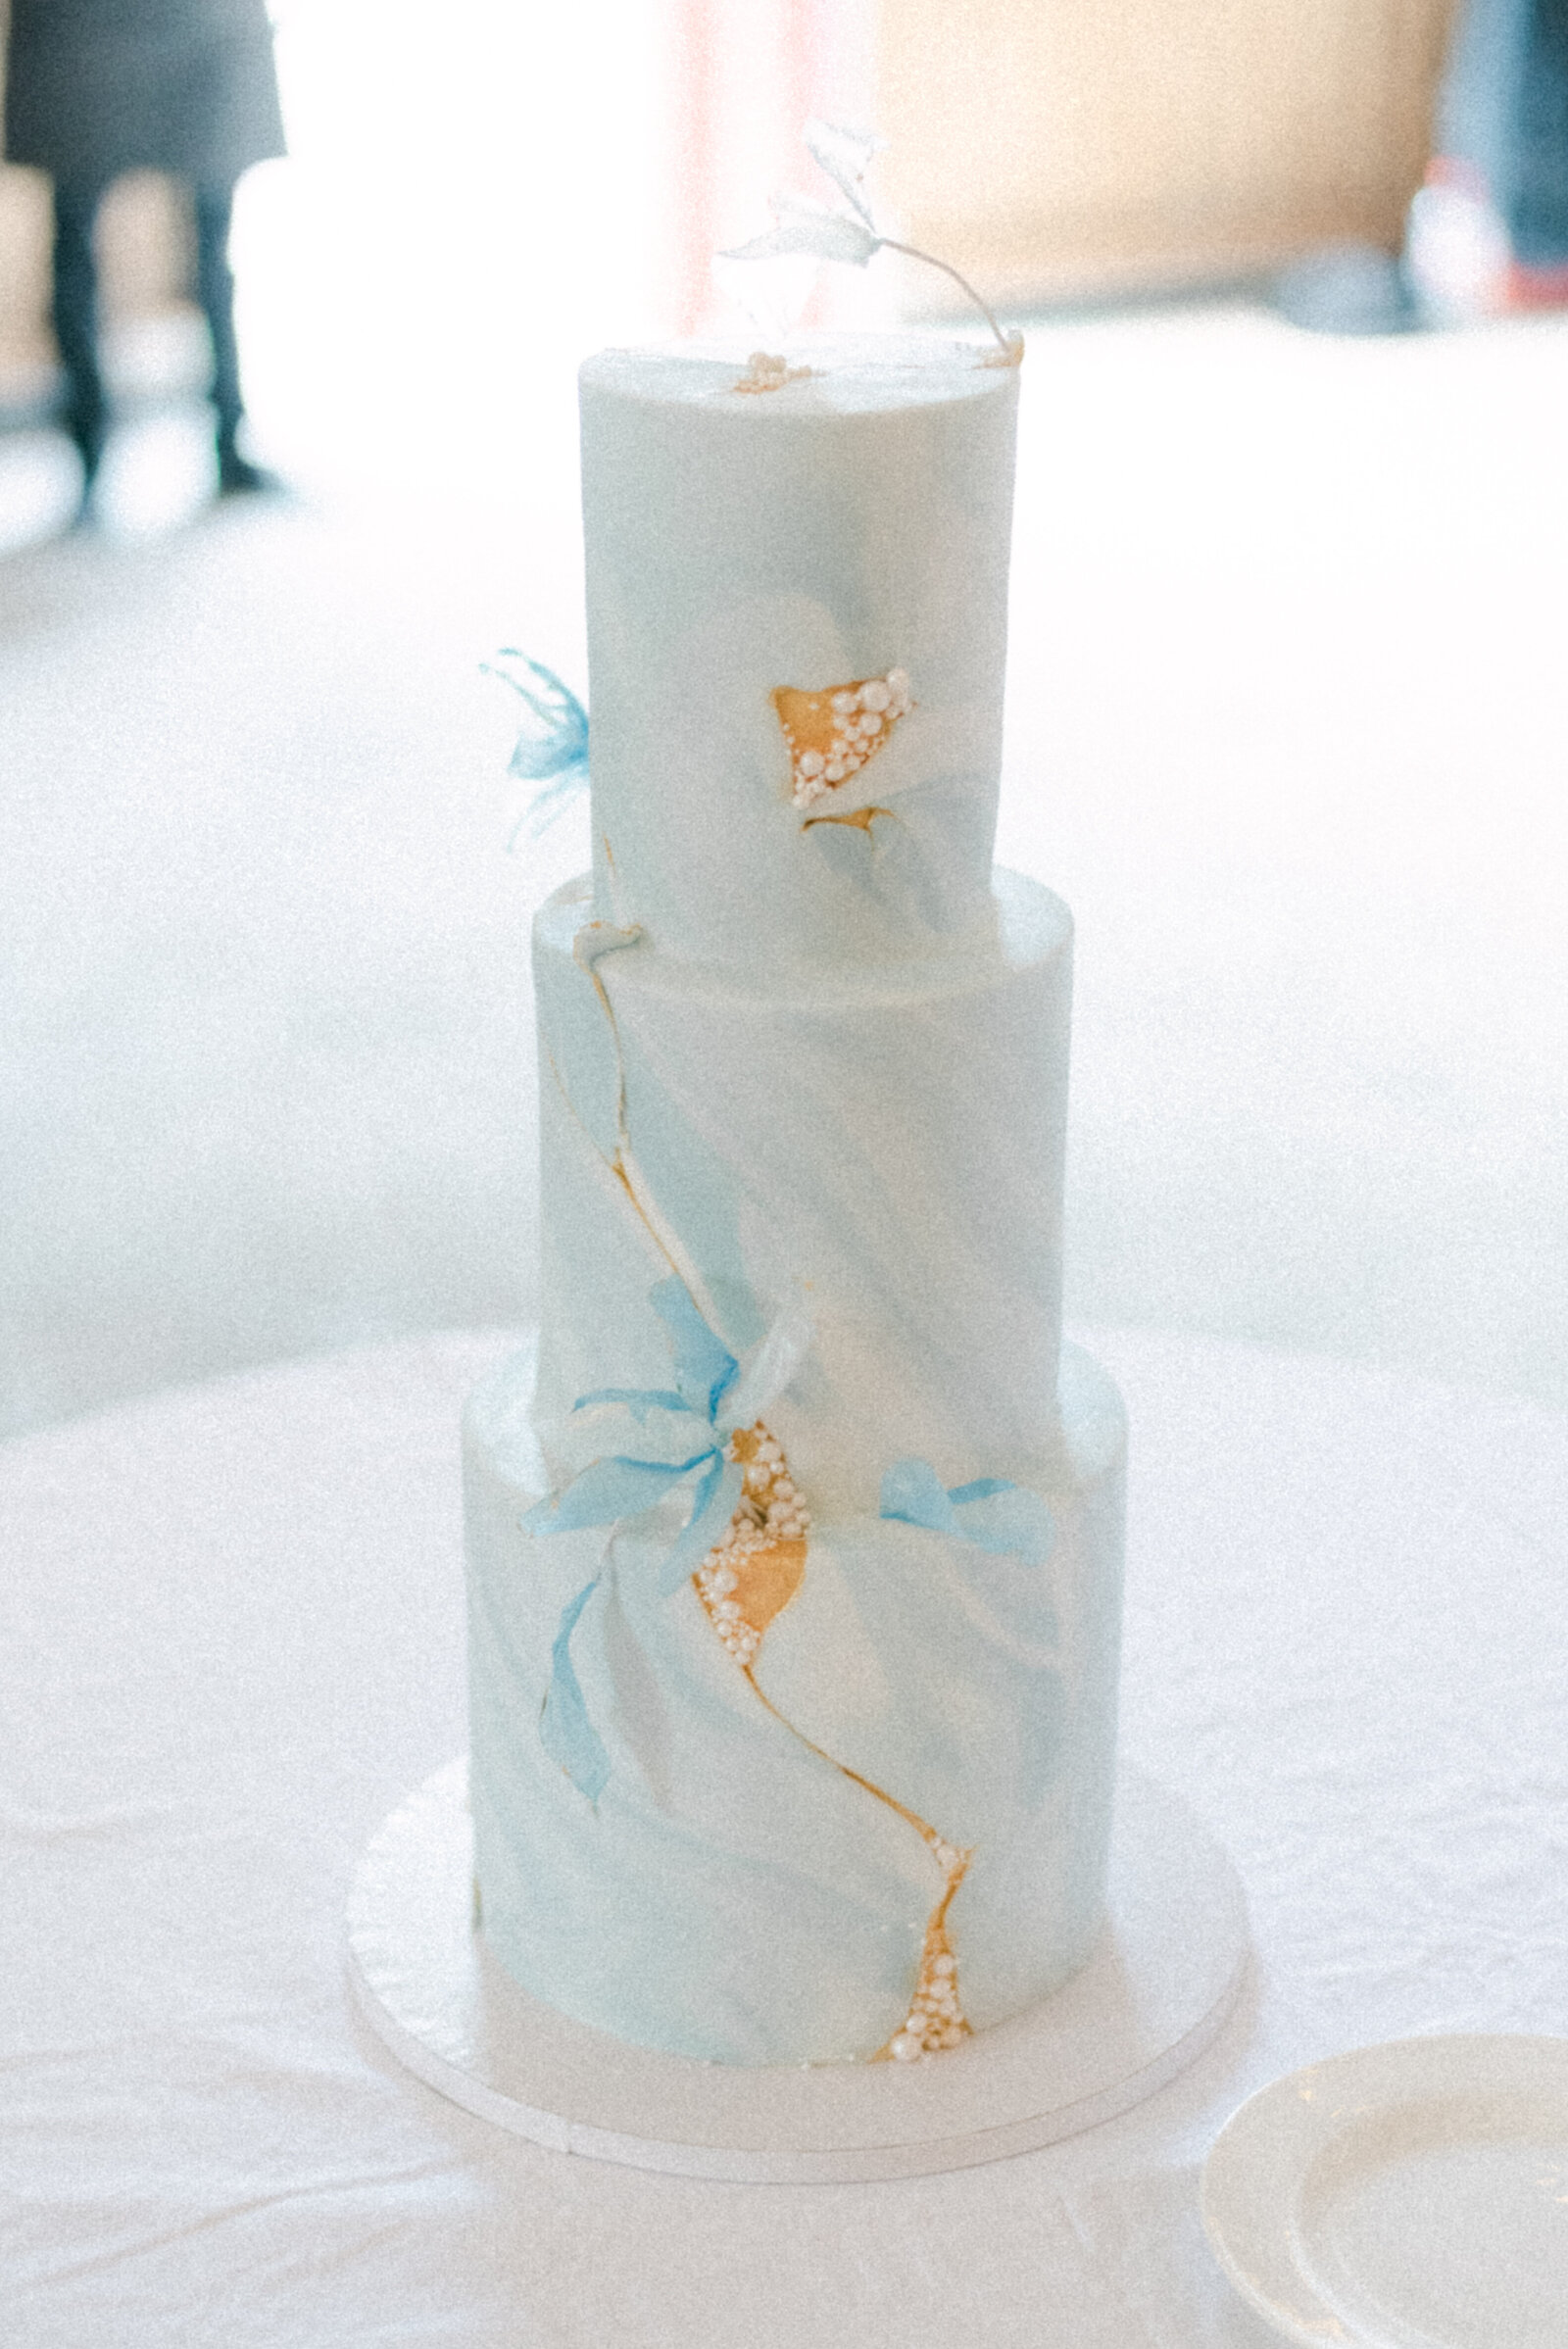 The wedding cake photographed by wedding photographer Hannika Gabrielsson.